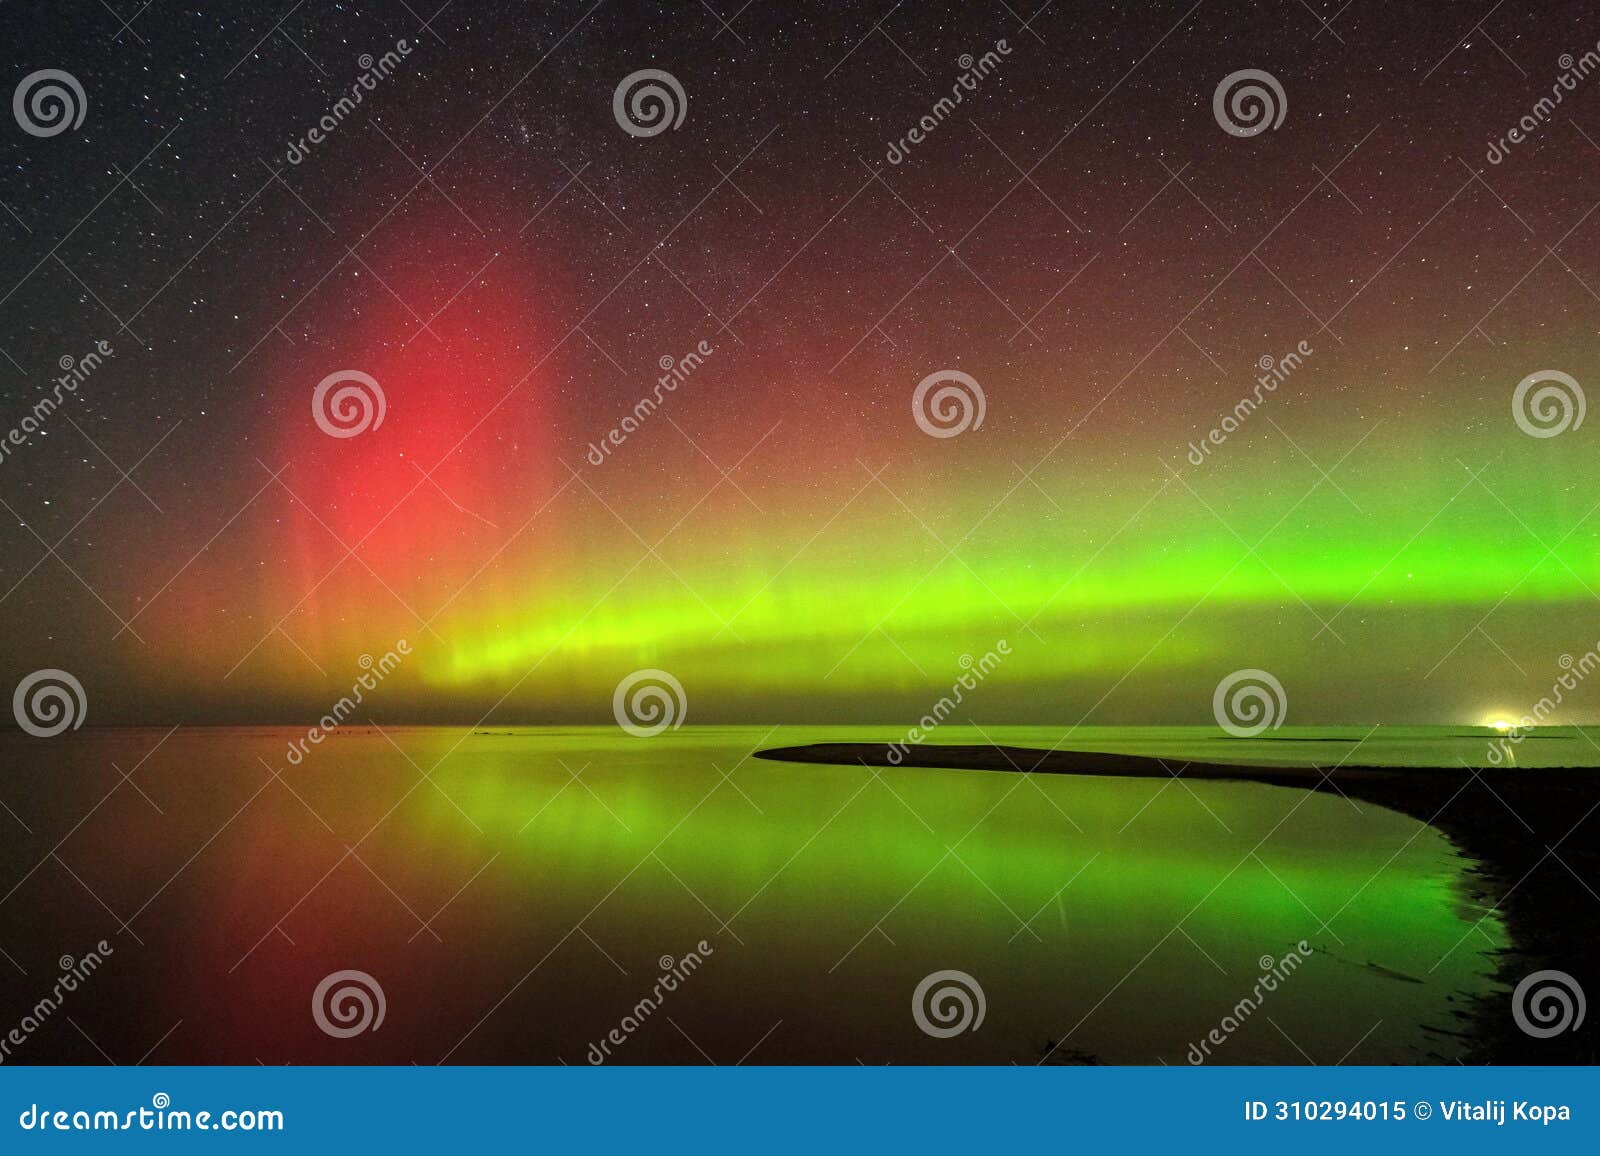 aurora polar lights observing